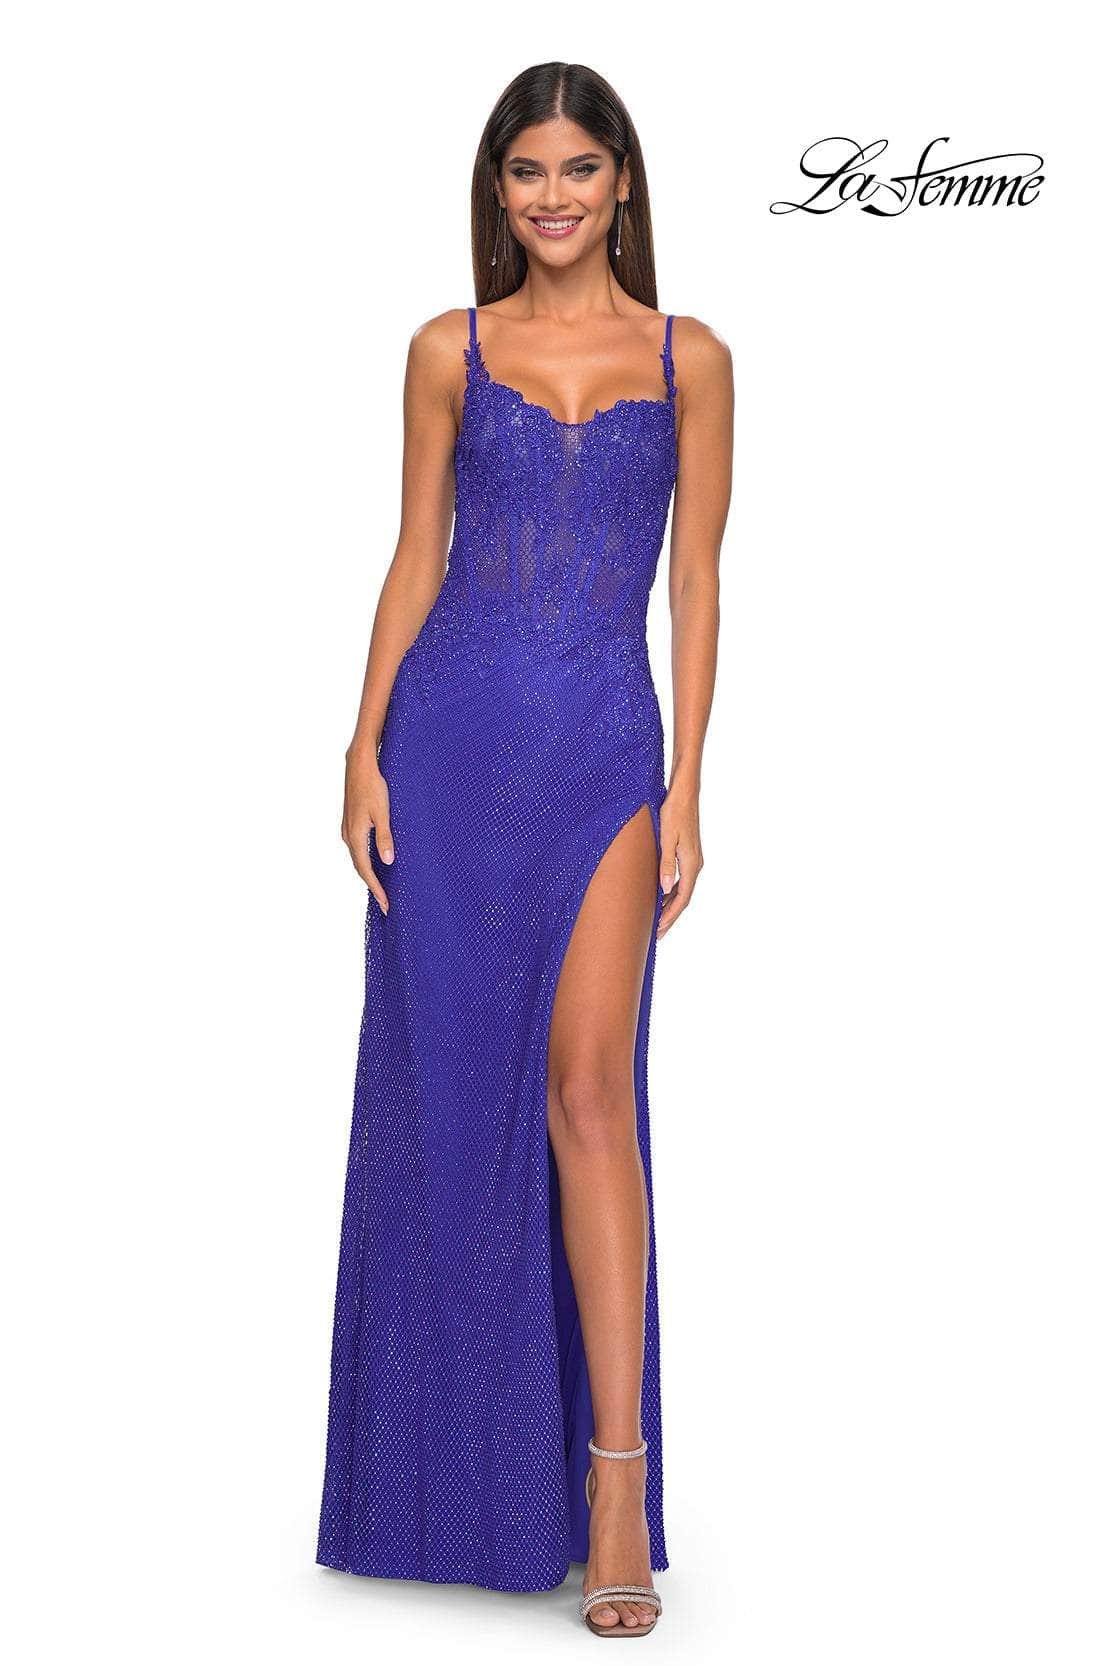 La Femme 32409 - Spaghetti Strap Beaded Appliqued Prom Gown
